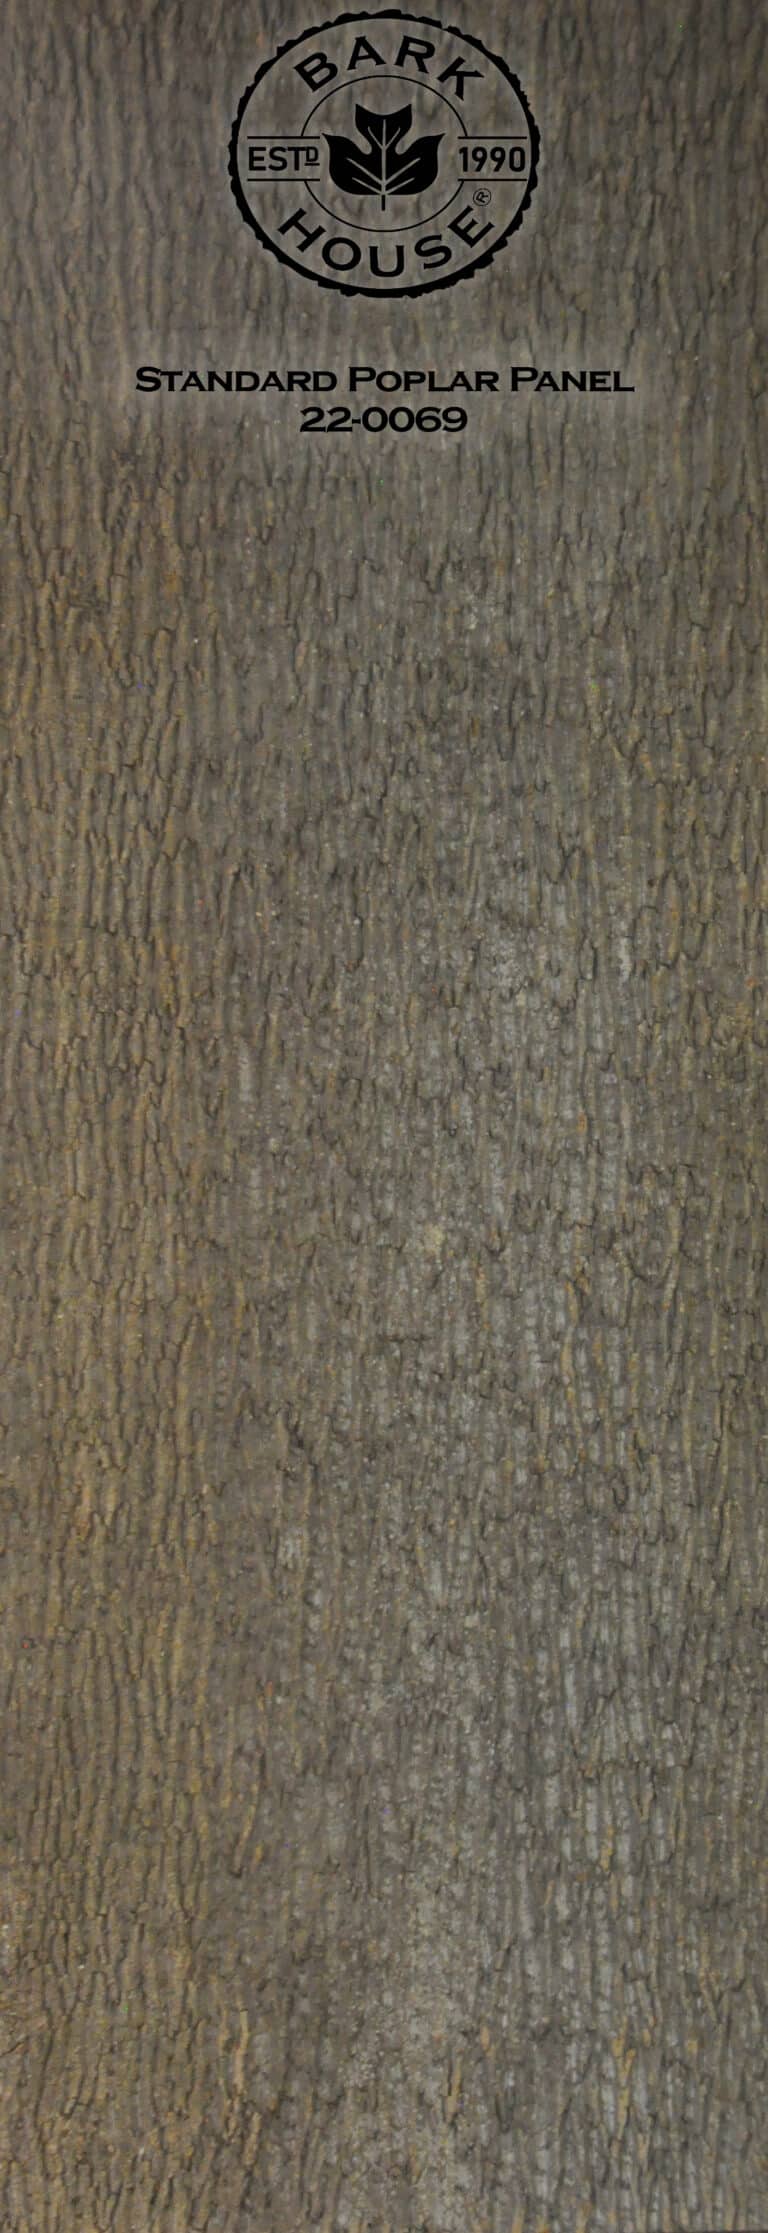 Bark House poplar bark panel SKU POPP-STD-22-0069